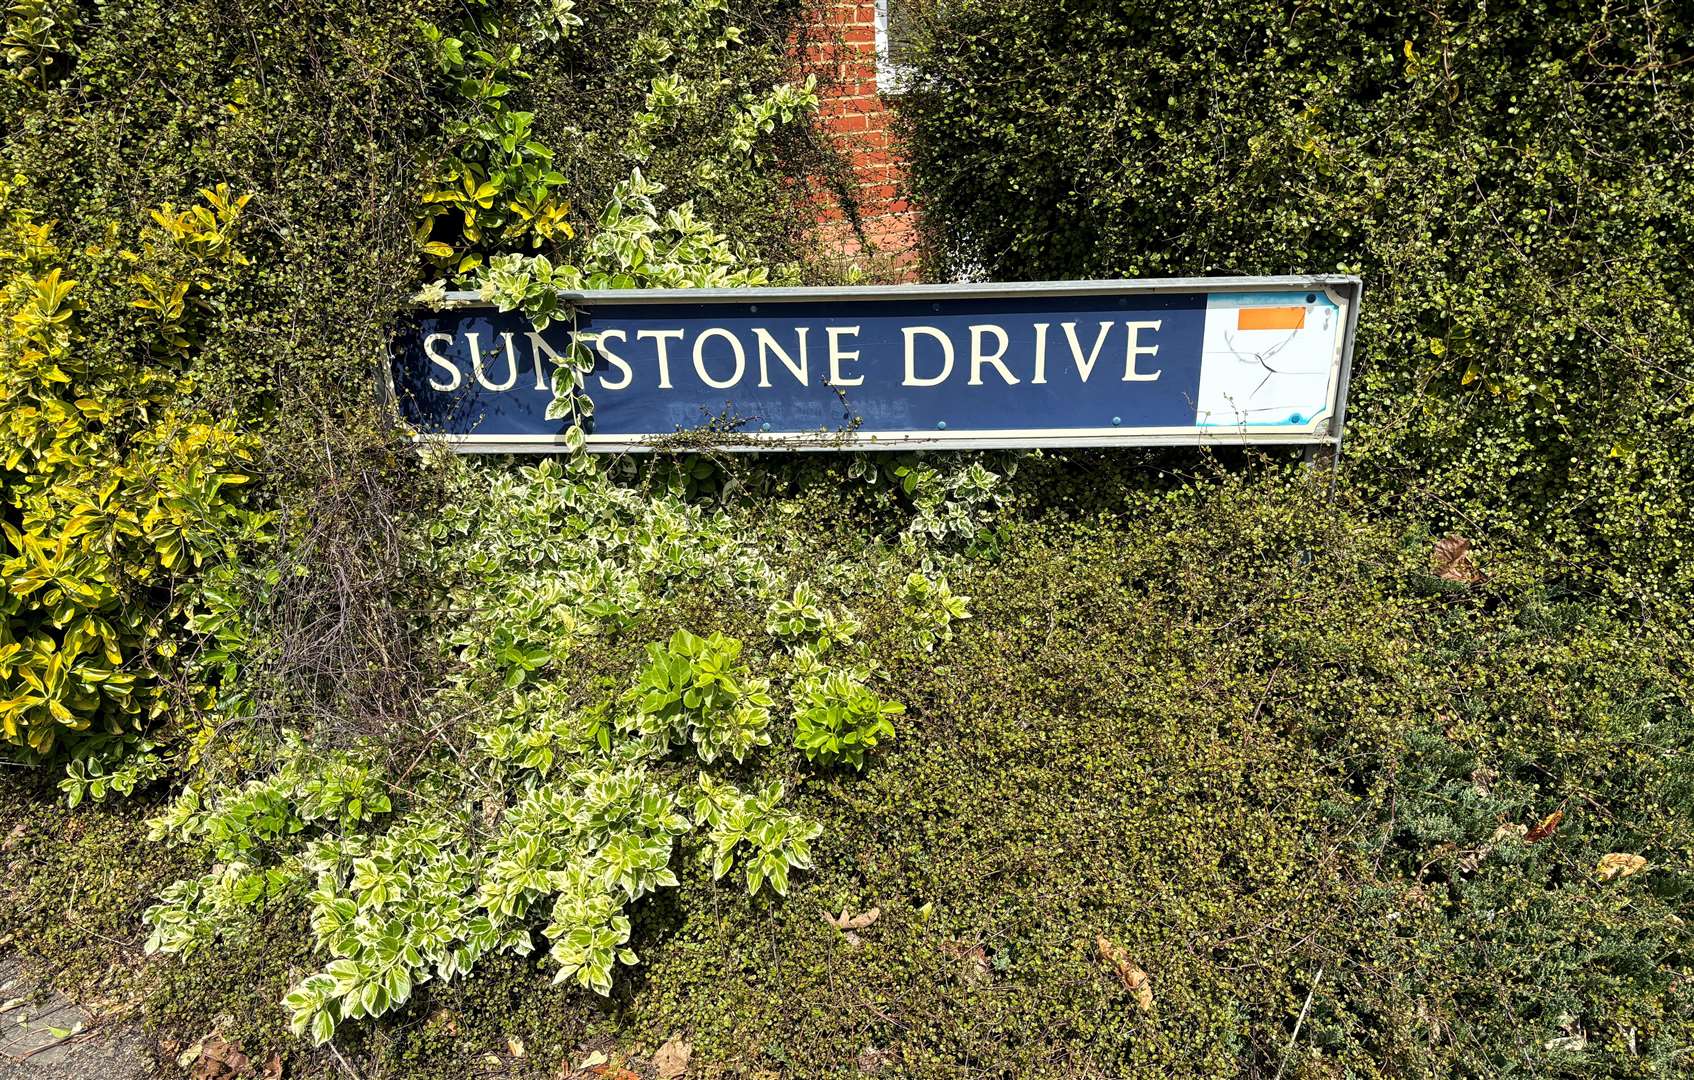 Sunstone Drive in Sittingbourne. Picture: Joe Harbert